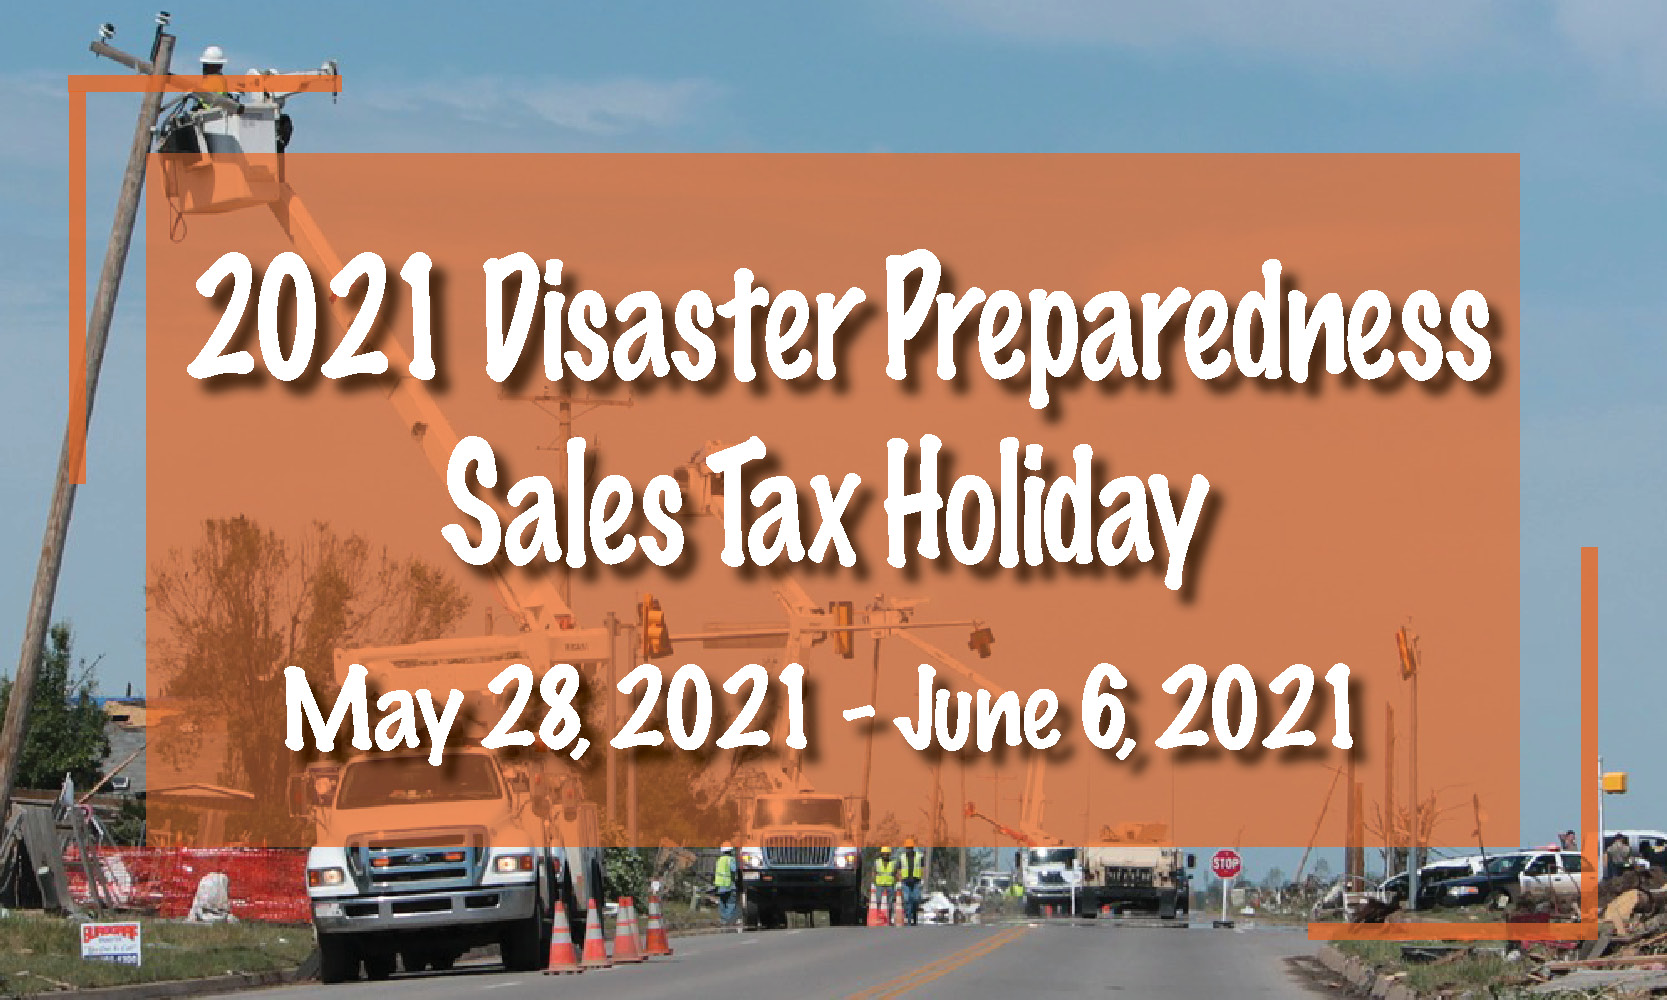 2021 Disaster Preparedness Sales Tax Holiday